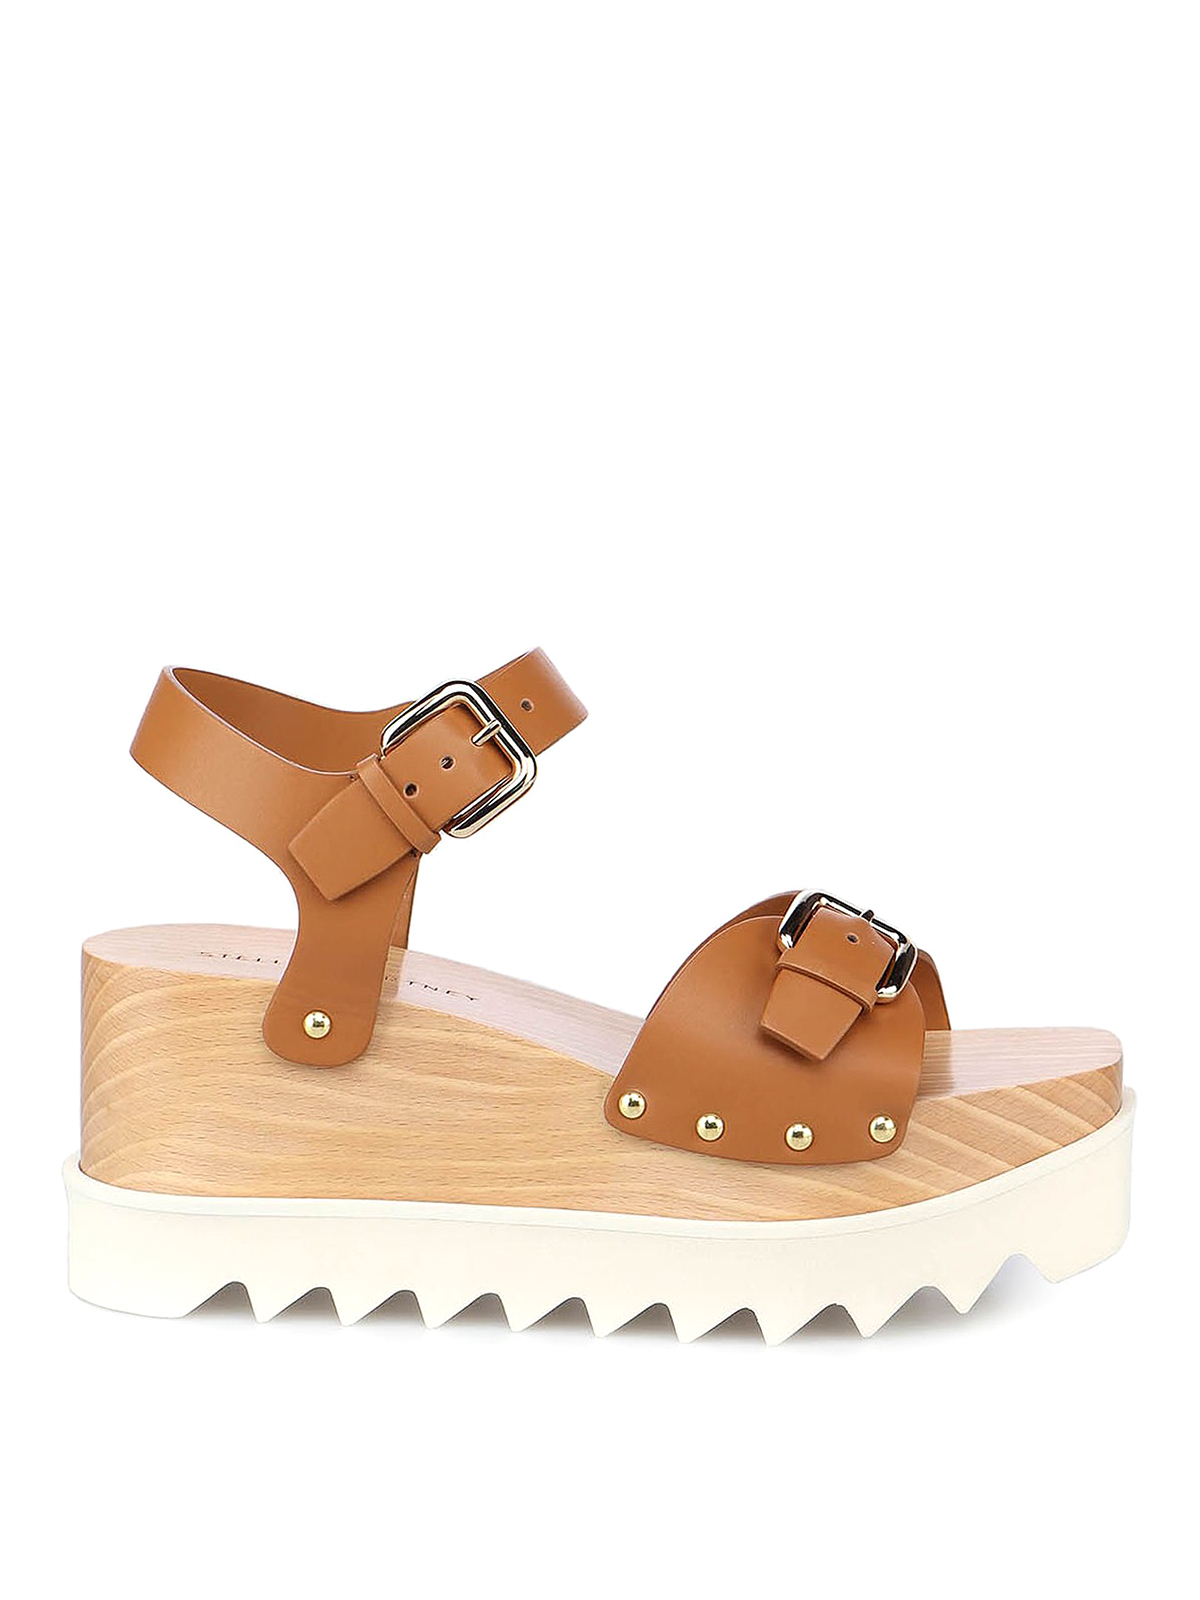 Sandals Stella Mccartney - Elyse vegan leather wedged sandals 